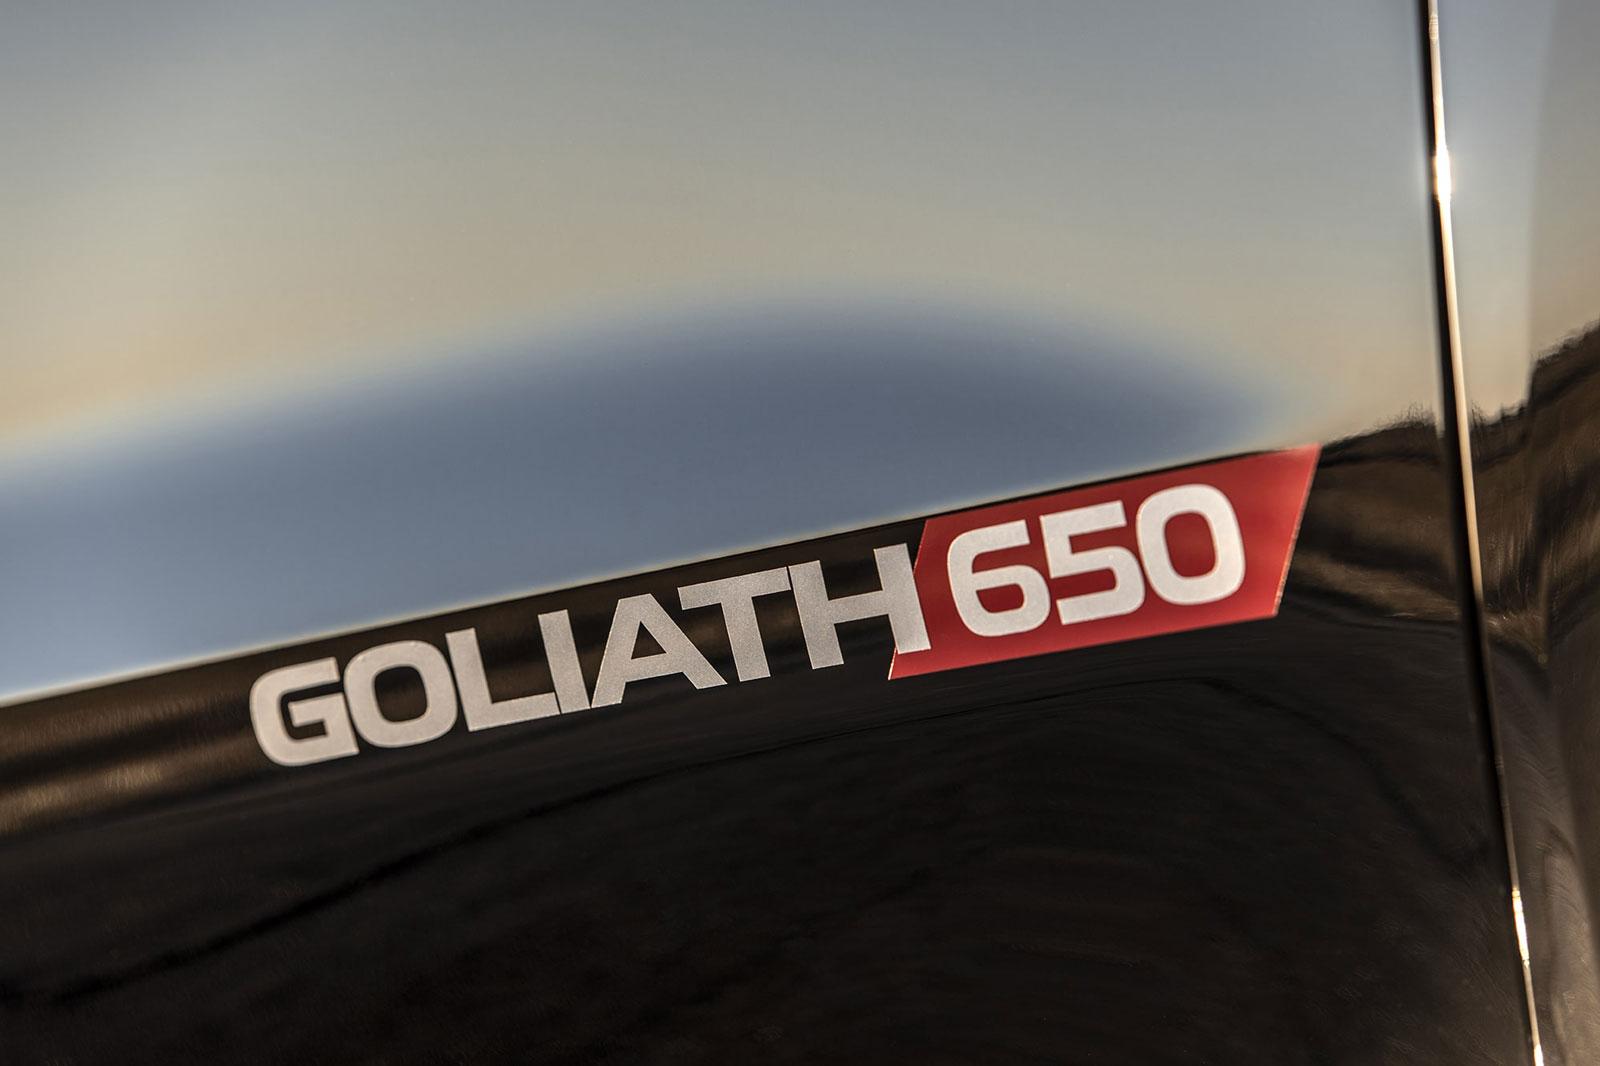 Close-up of a Goliath 650 badge on a black Chevy Silverado